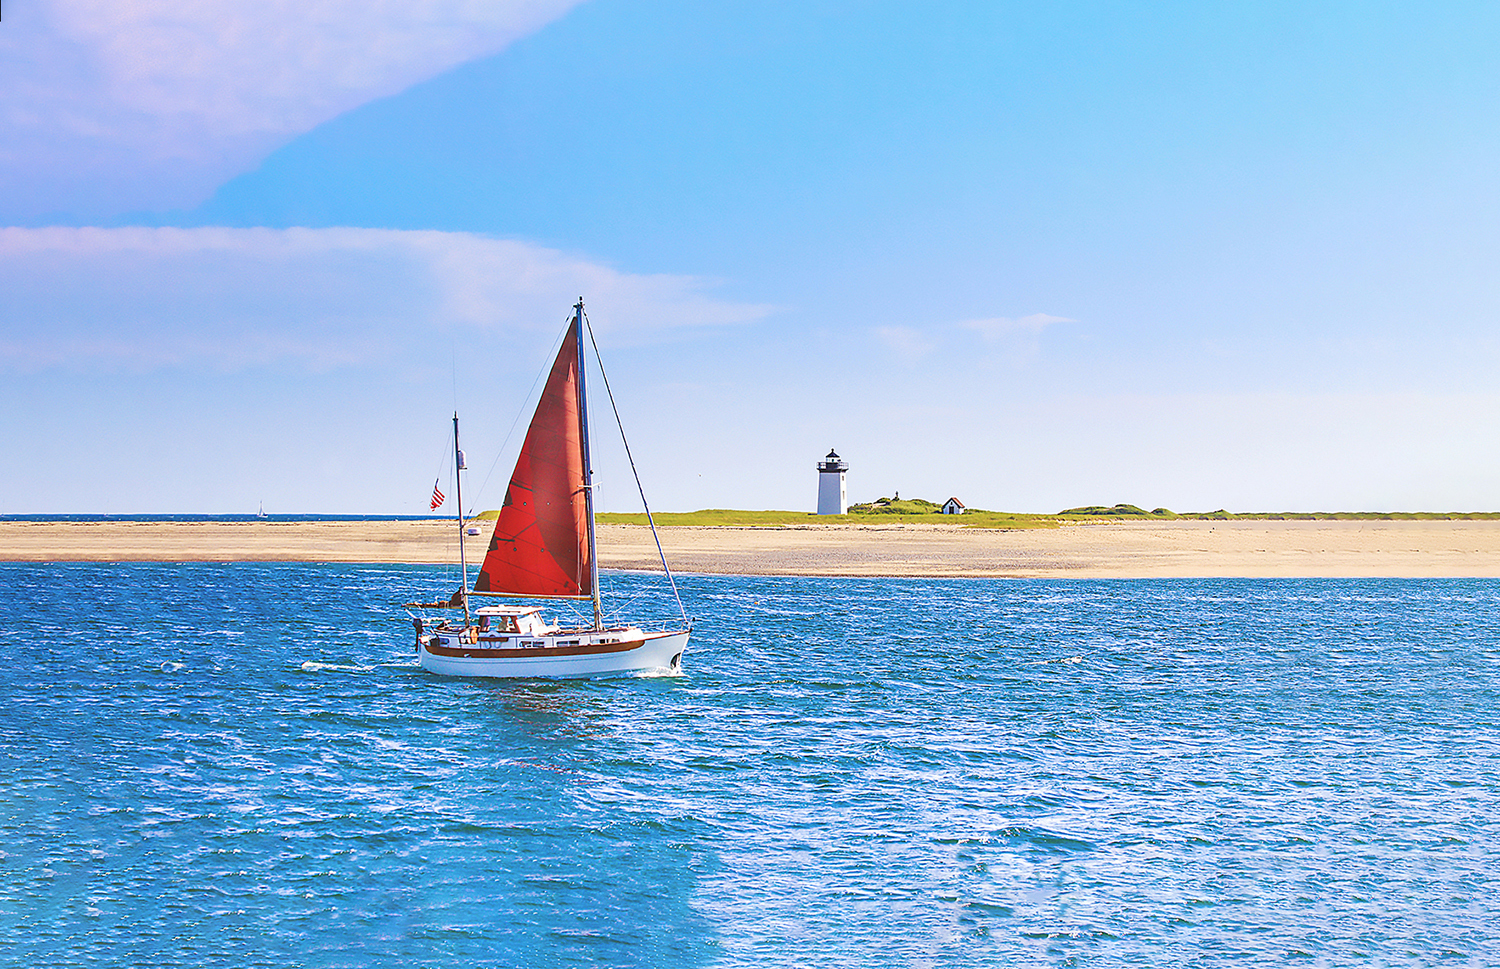 A red sailboat follows a course parallel to a sandy beach.